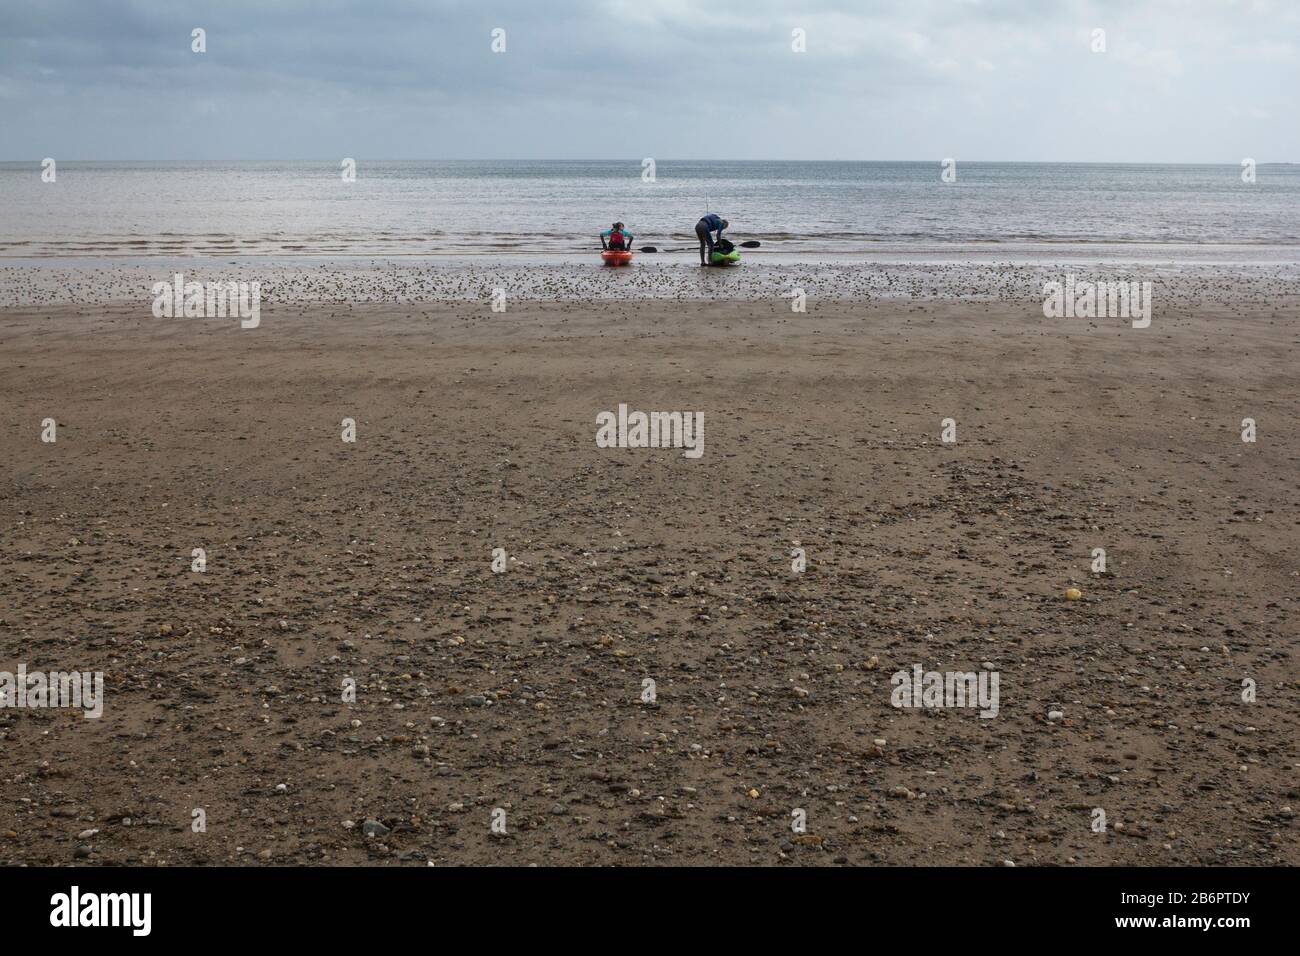 Kayak su una spiaggia scozzese Foto Stock